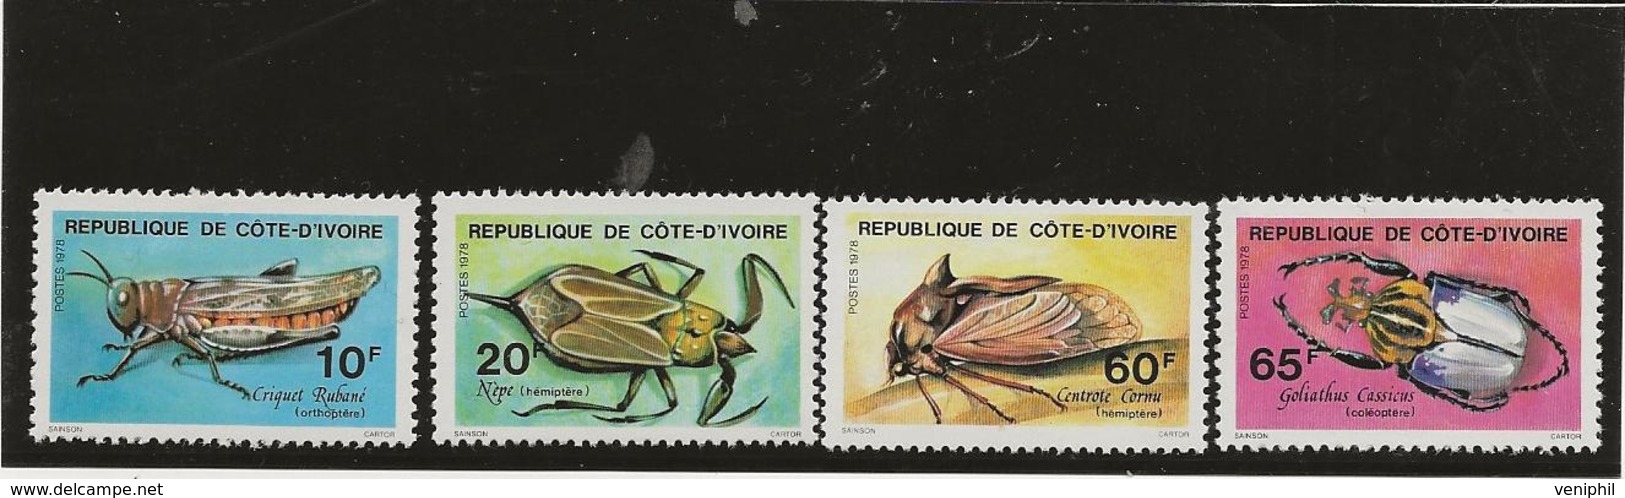 COTE D'IVOIRE - SERIE INSECTES N° 463 A 466  NEUF INFIME CHARNIERE -ANNEE 1978 - COTE :10 € - Côte D'Ivoire (1960-...)